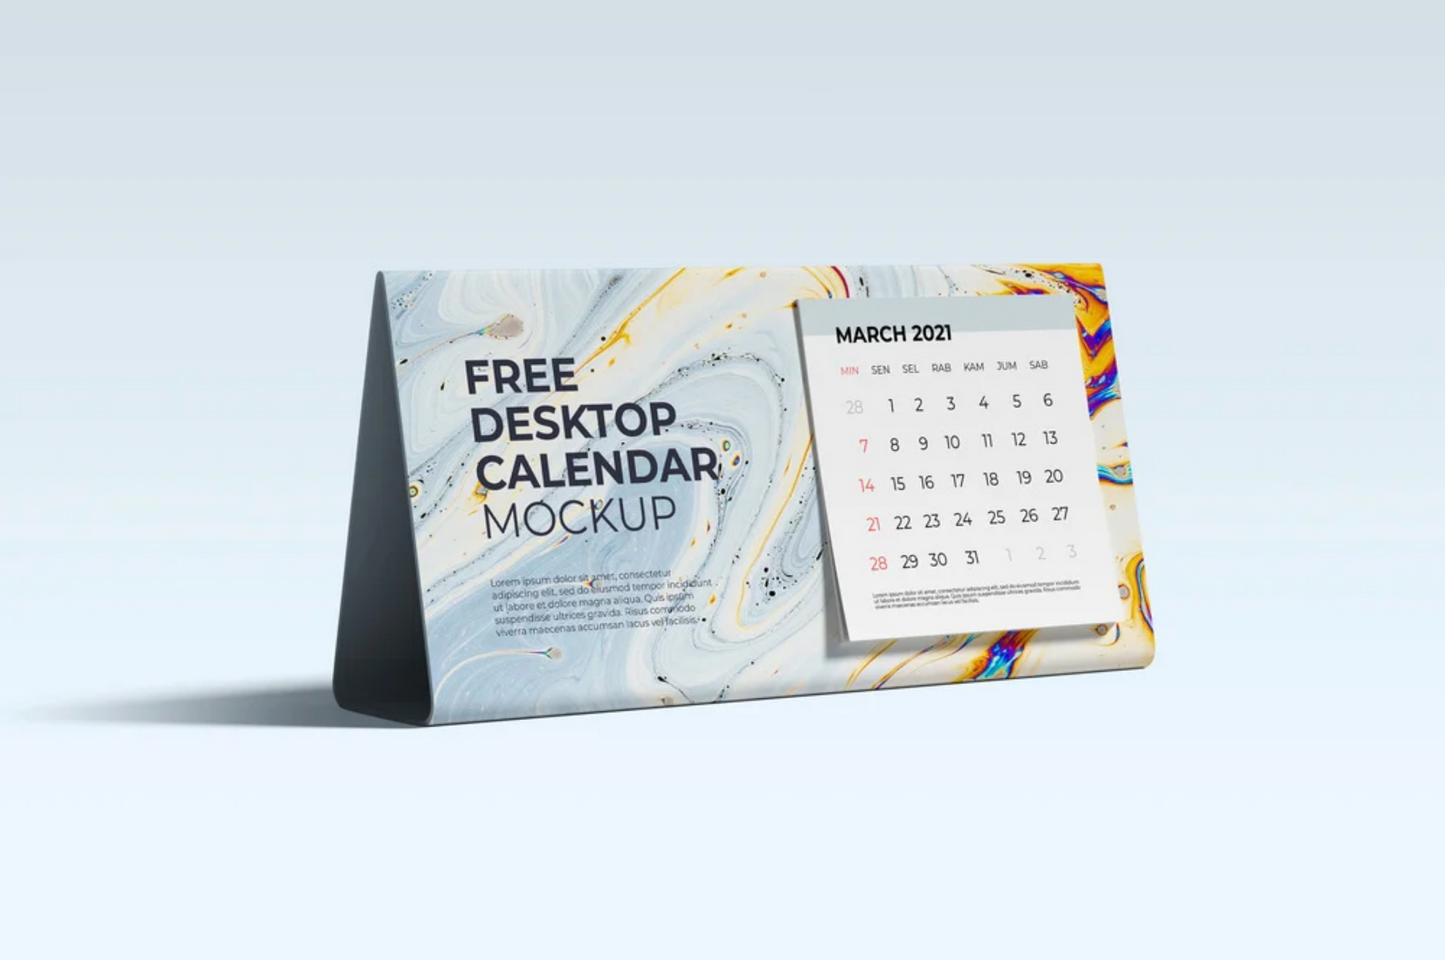 Free Calendar on Desktop Mockup PSD